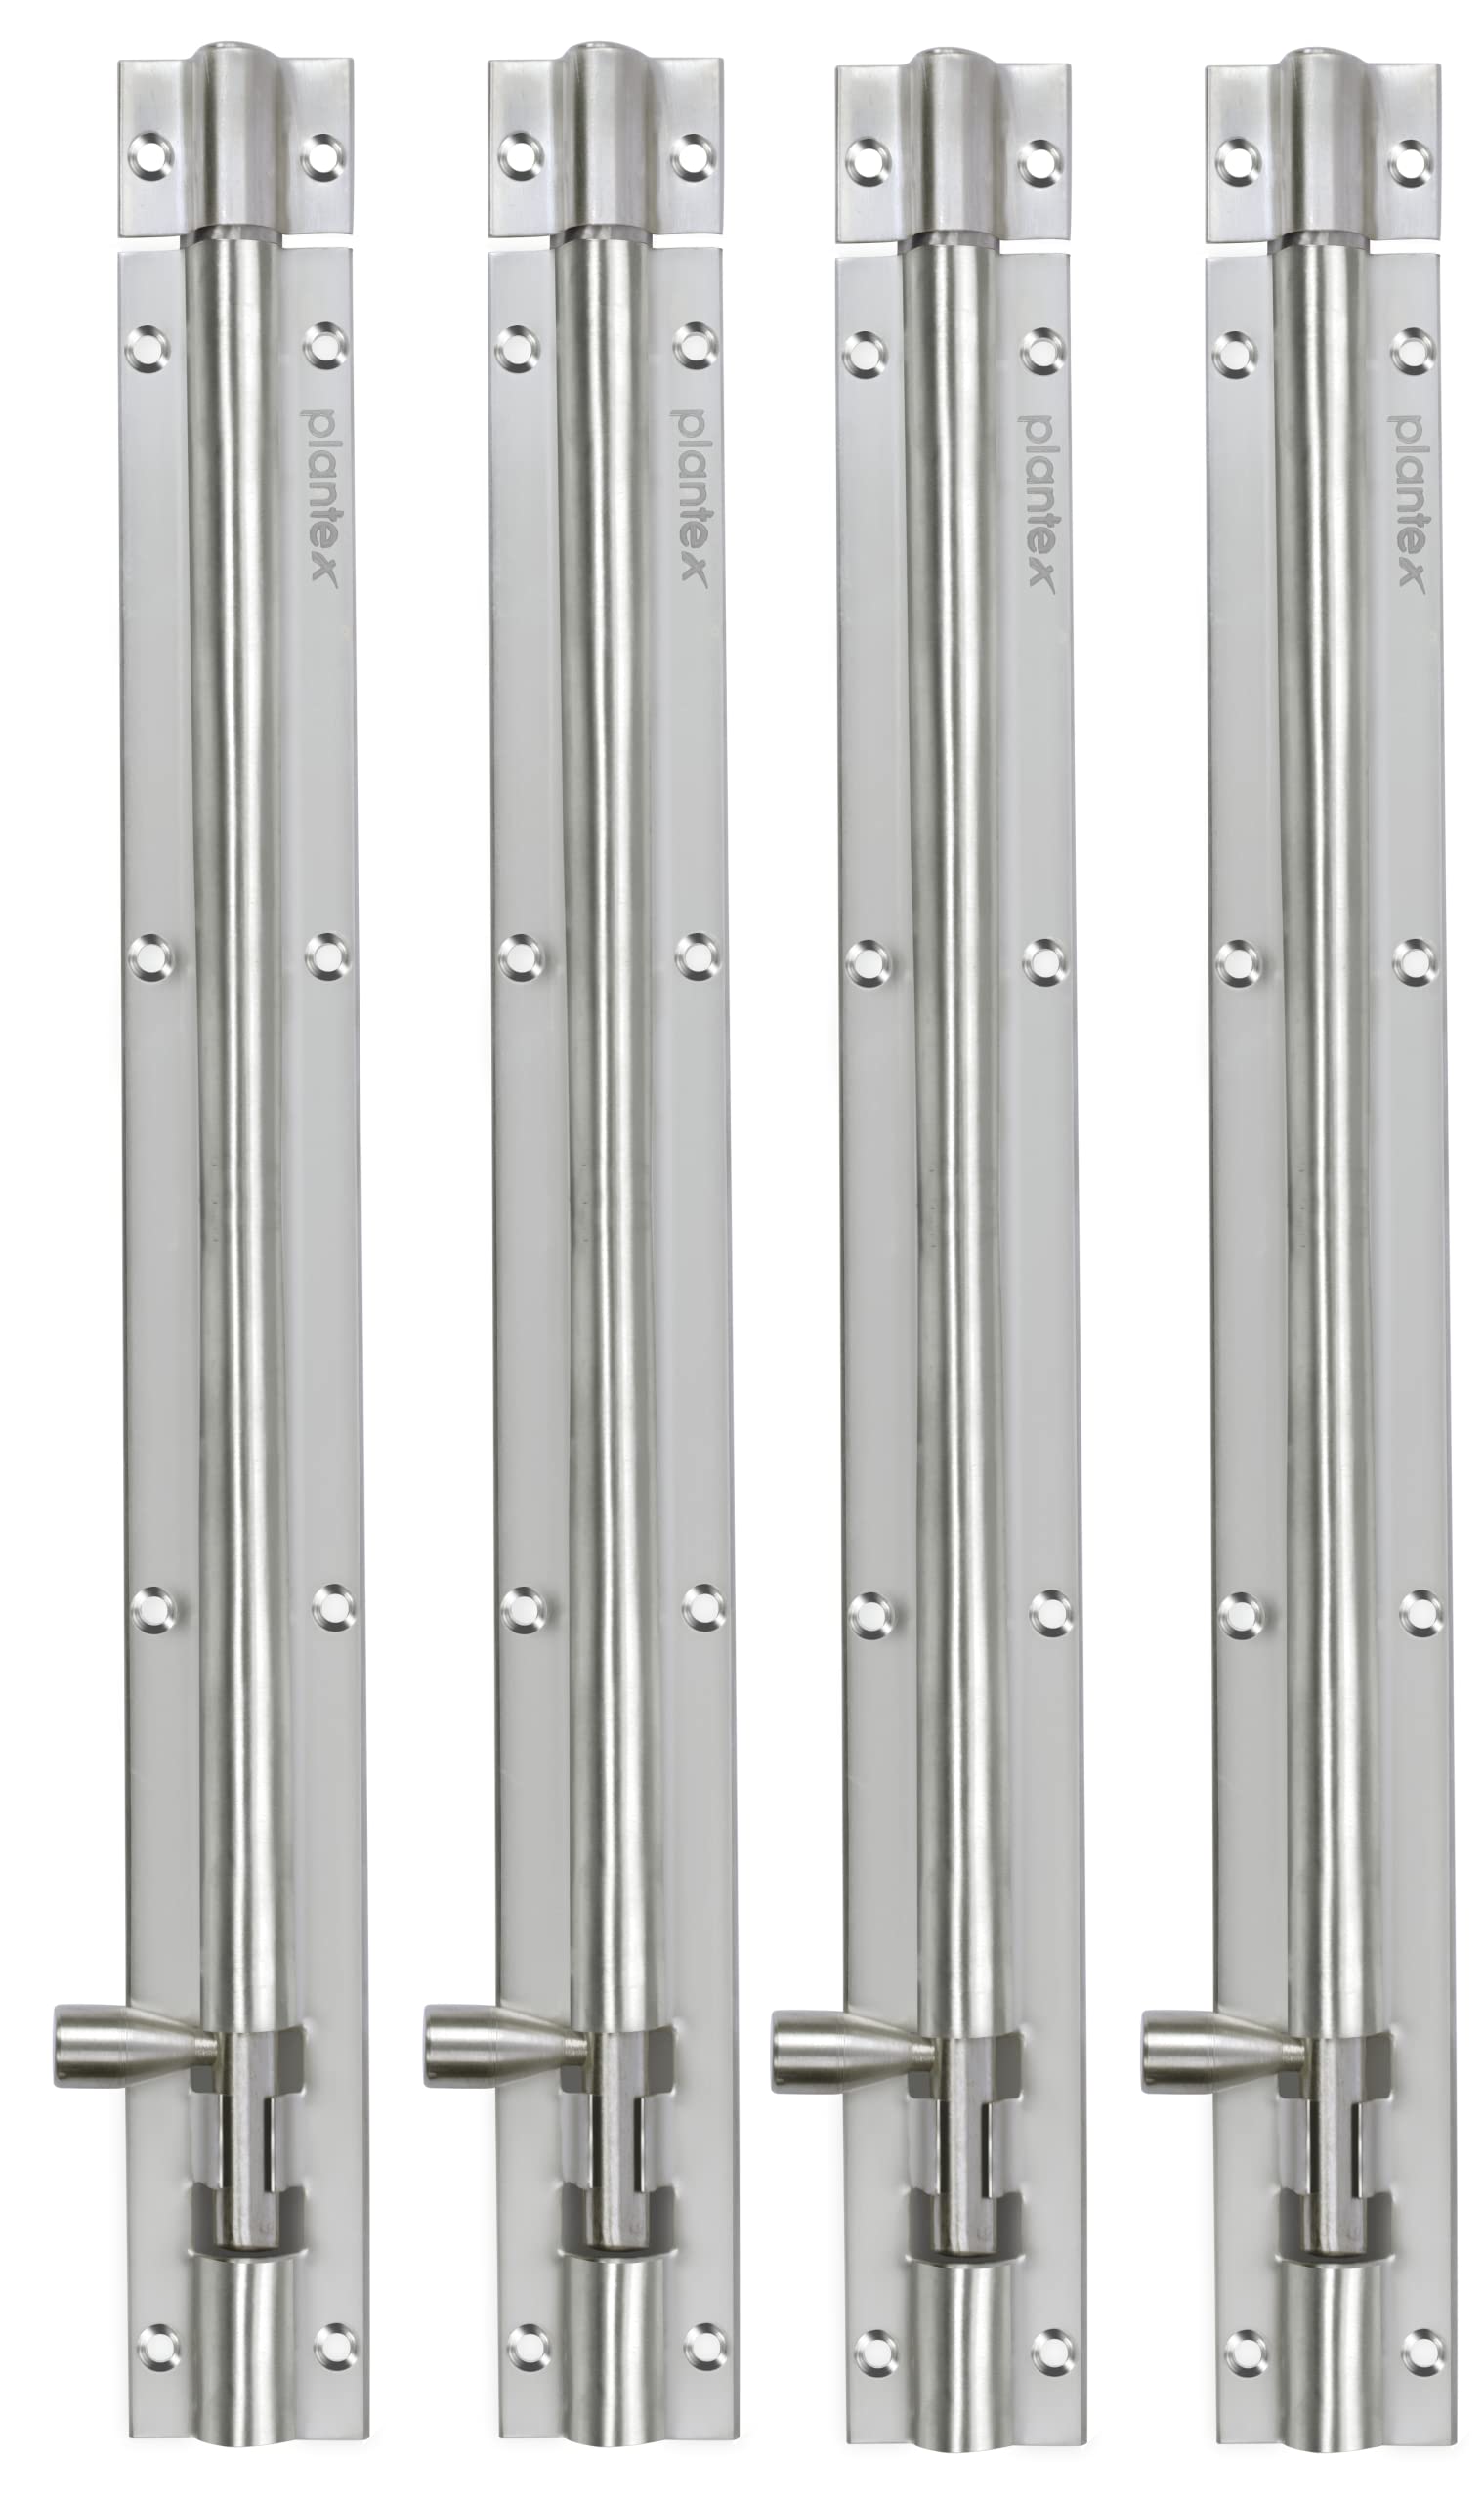 Plantex matt Tower Bolt for Windows/Doors/Wardrobe - 12-inches (Pack of 4)